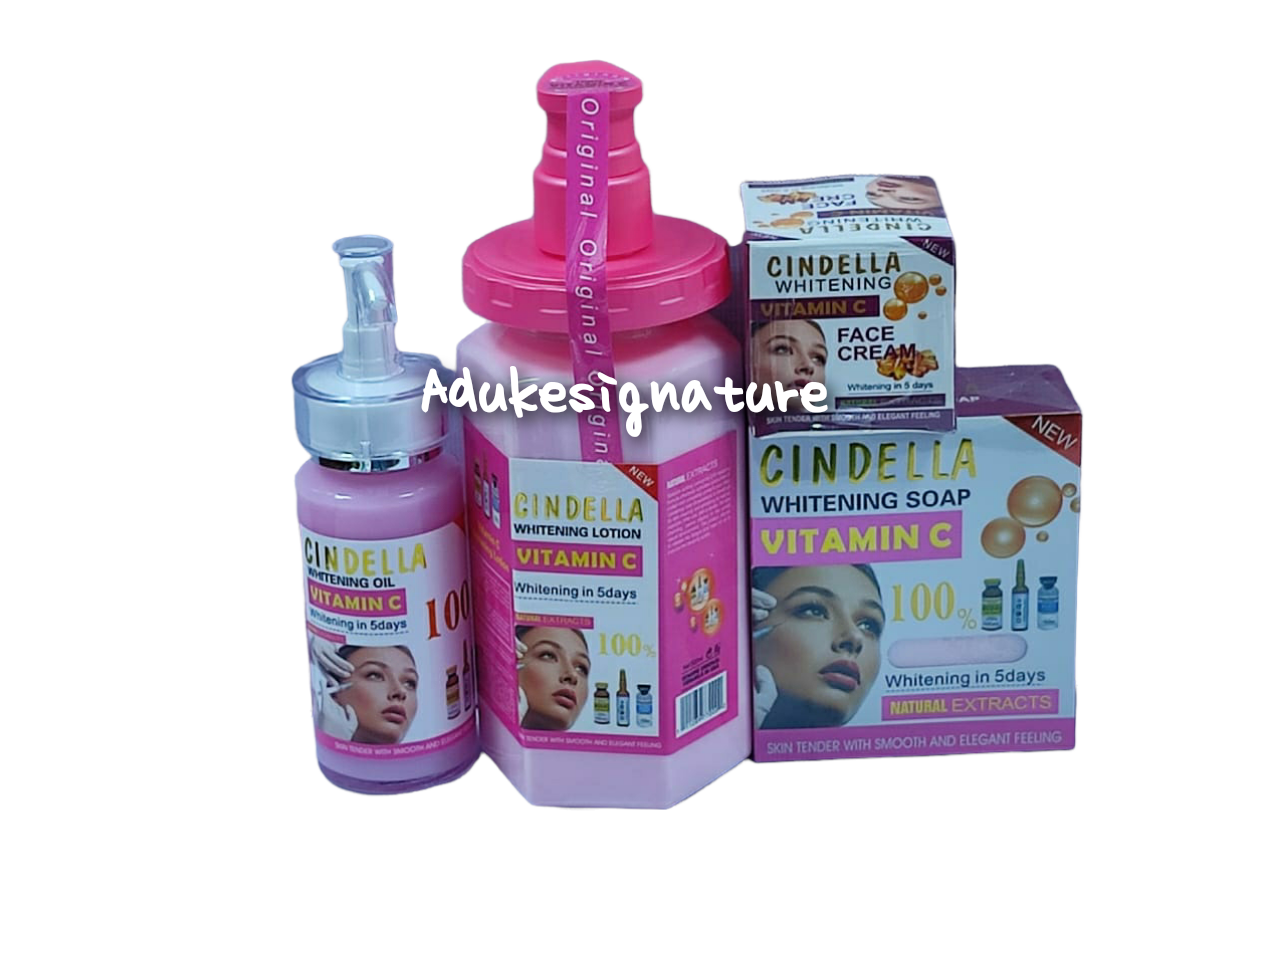 Cindella body lotion, serum, face cream and soap